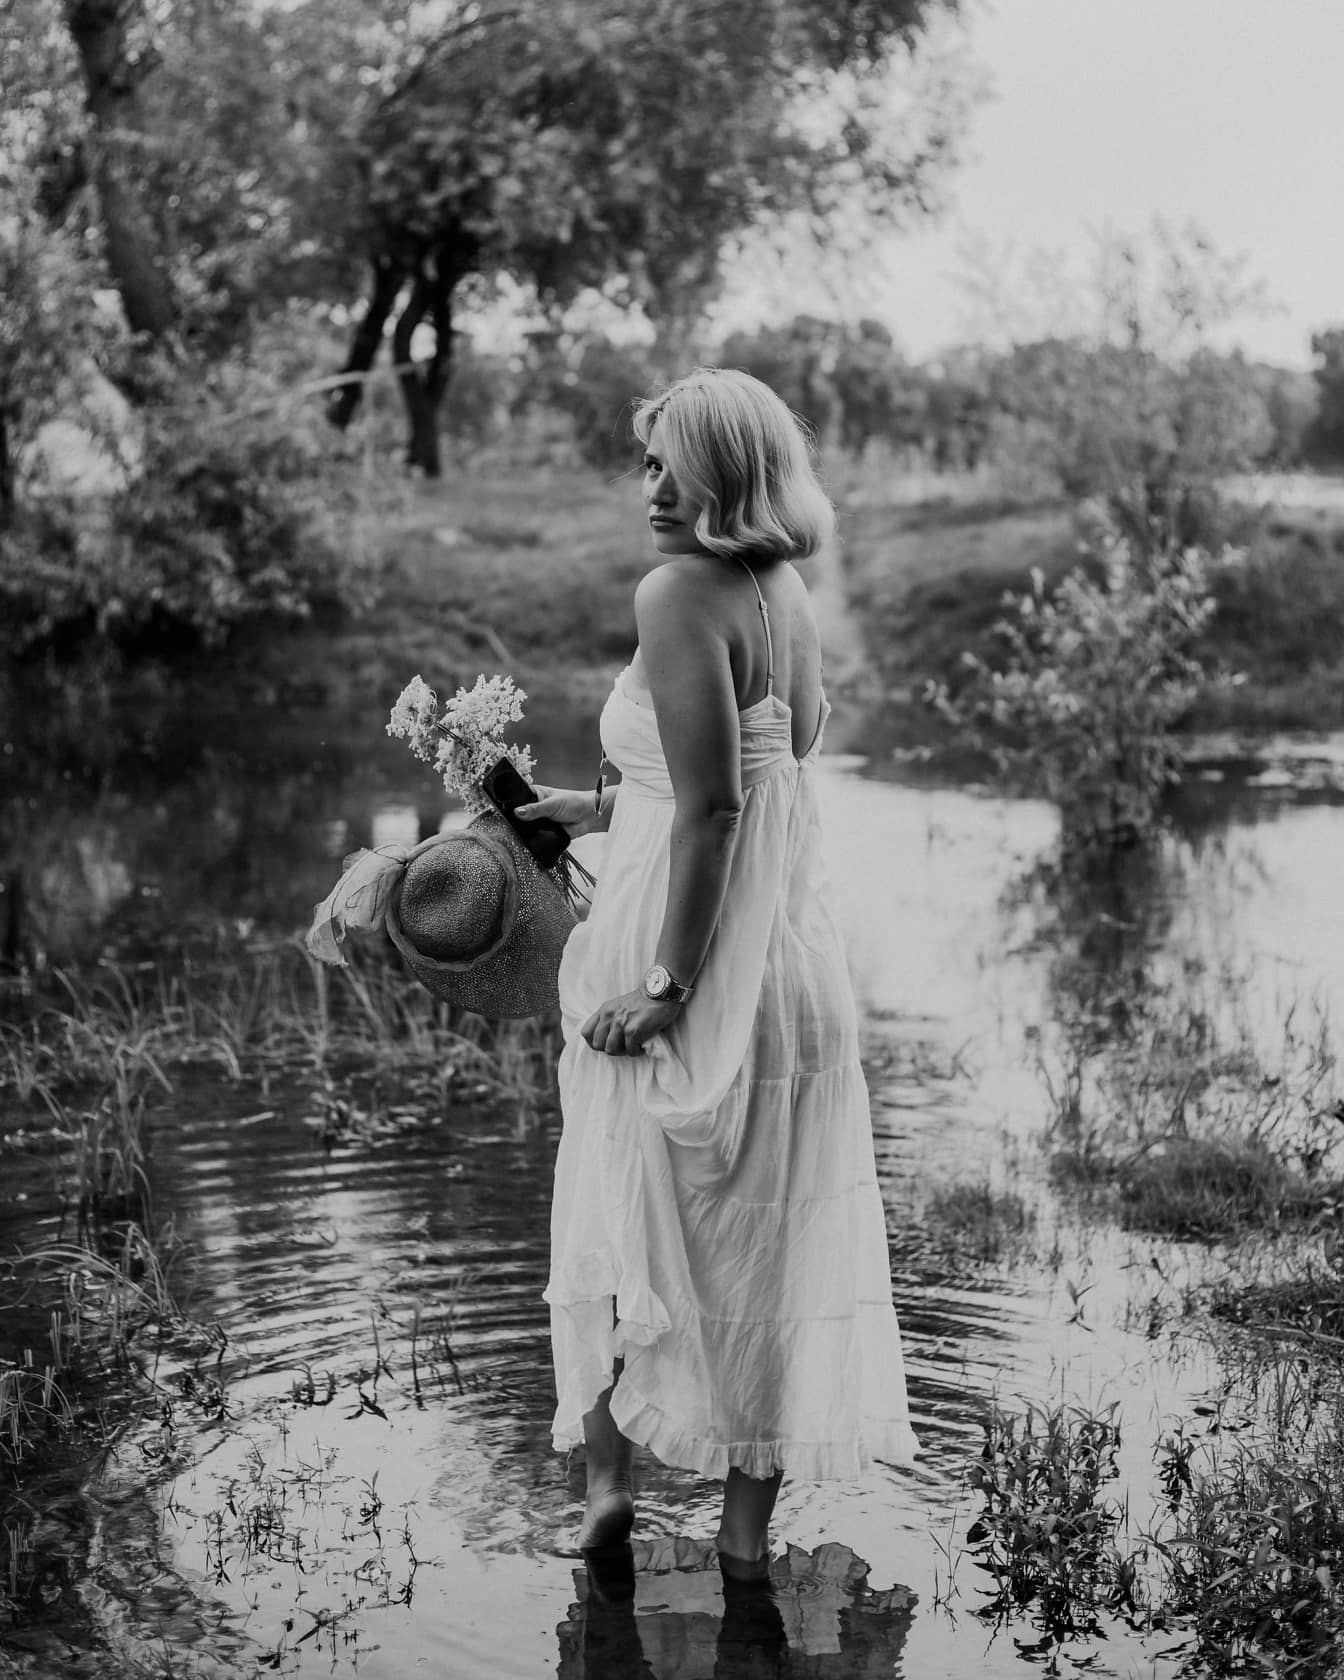 Portret monocrom al blondei desculțe în lac purtând rochie albă